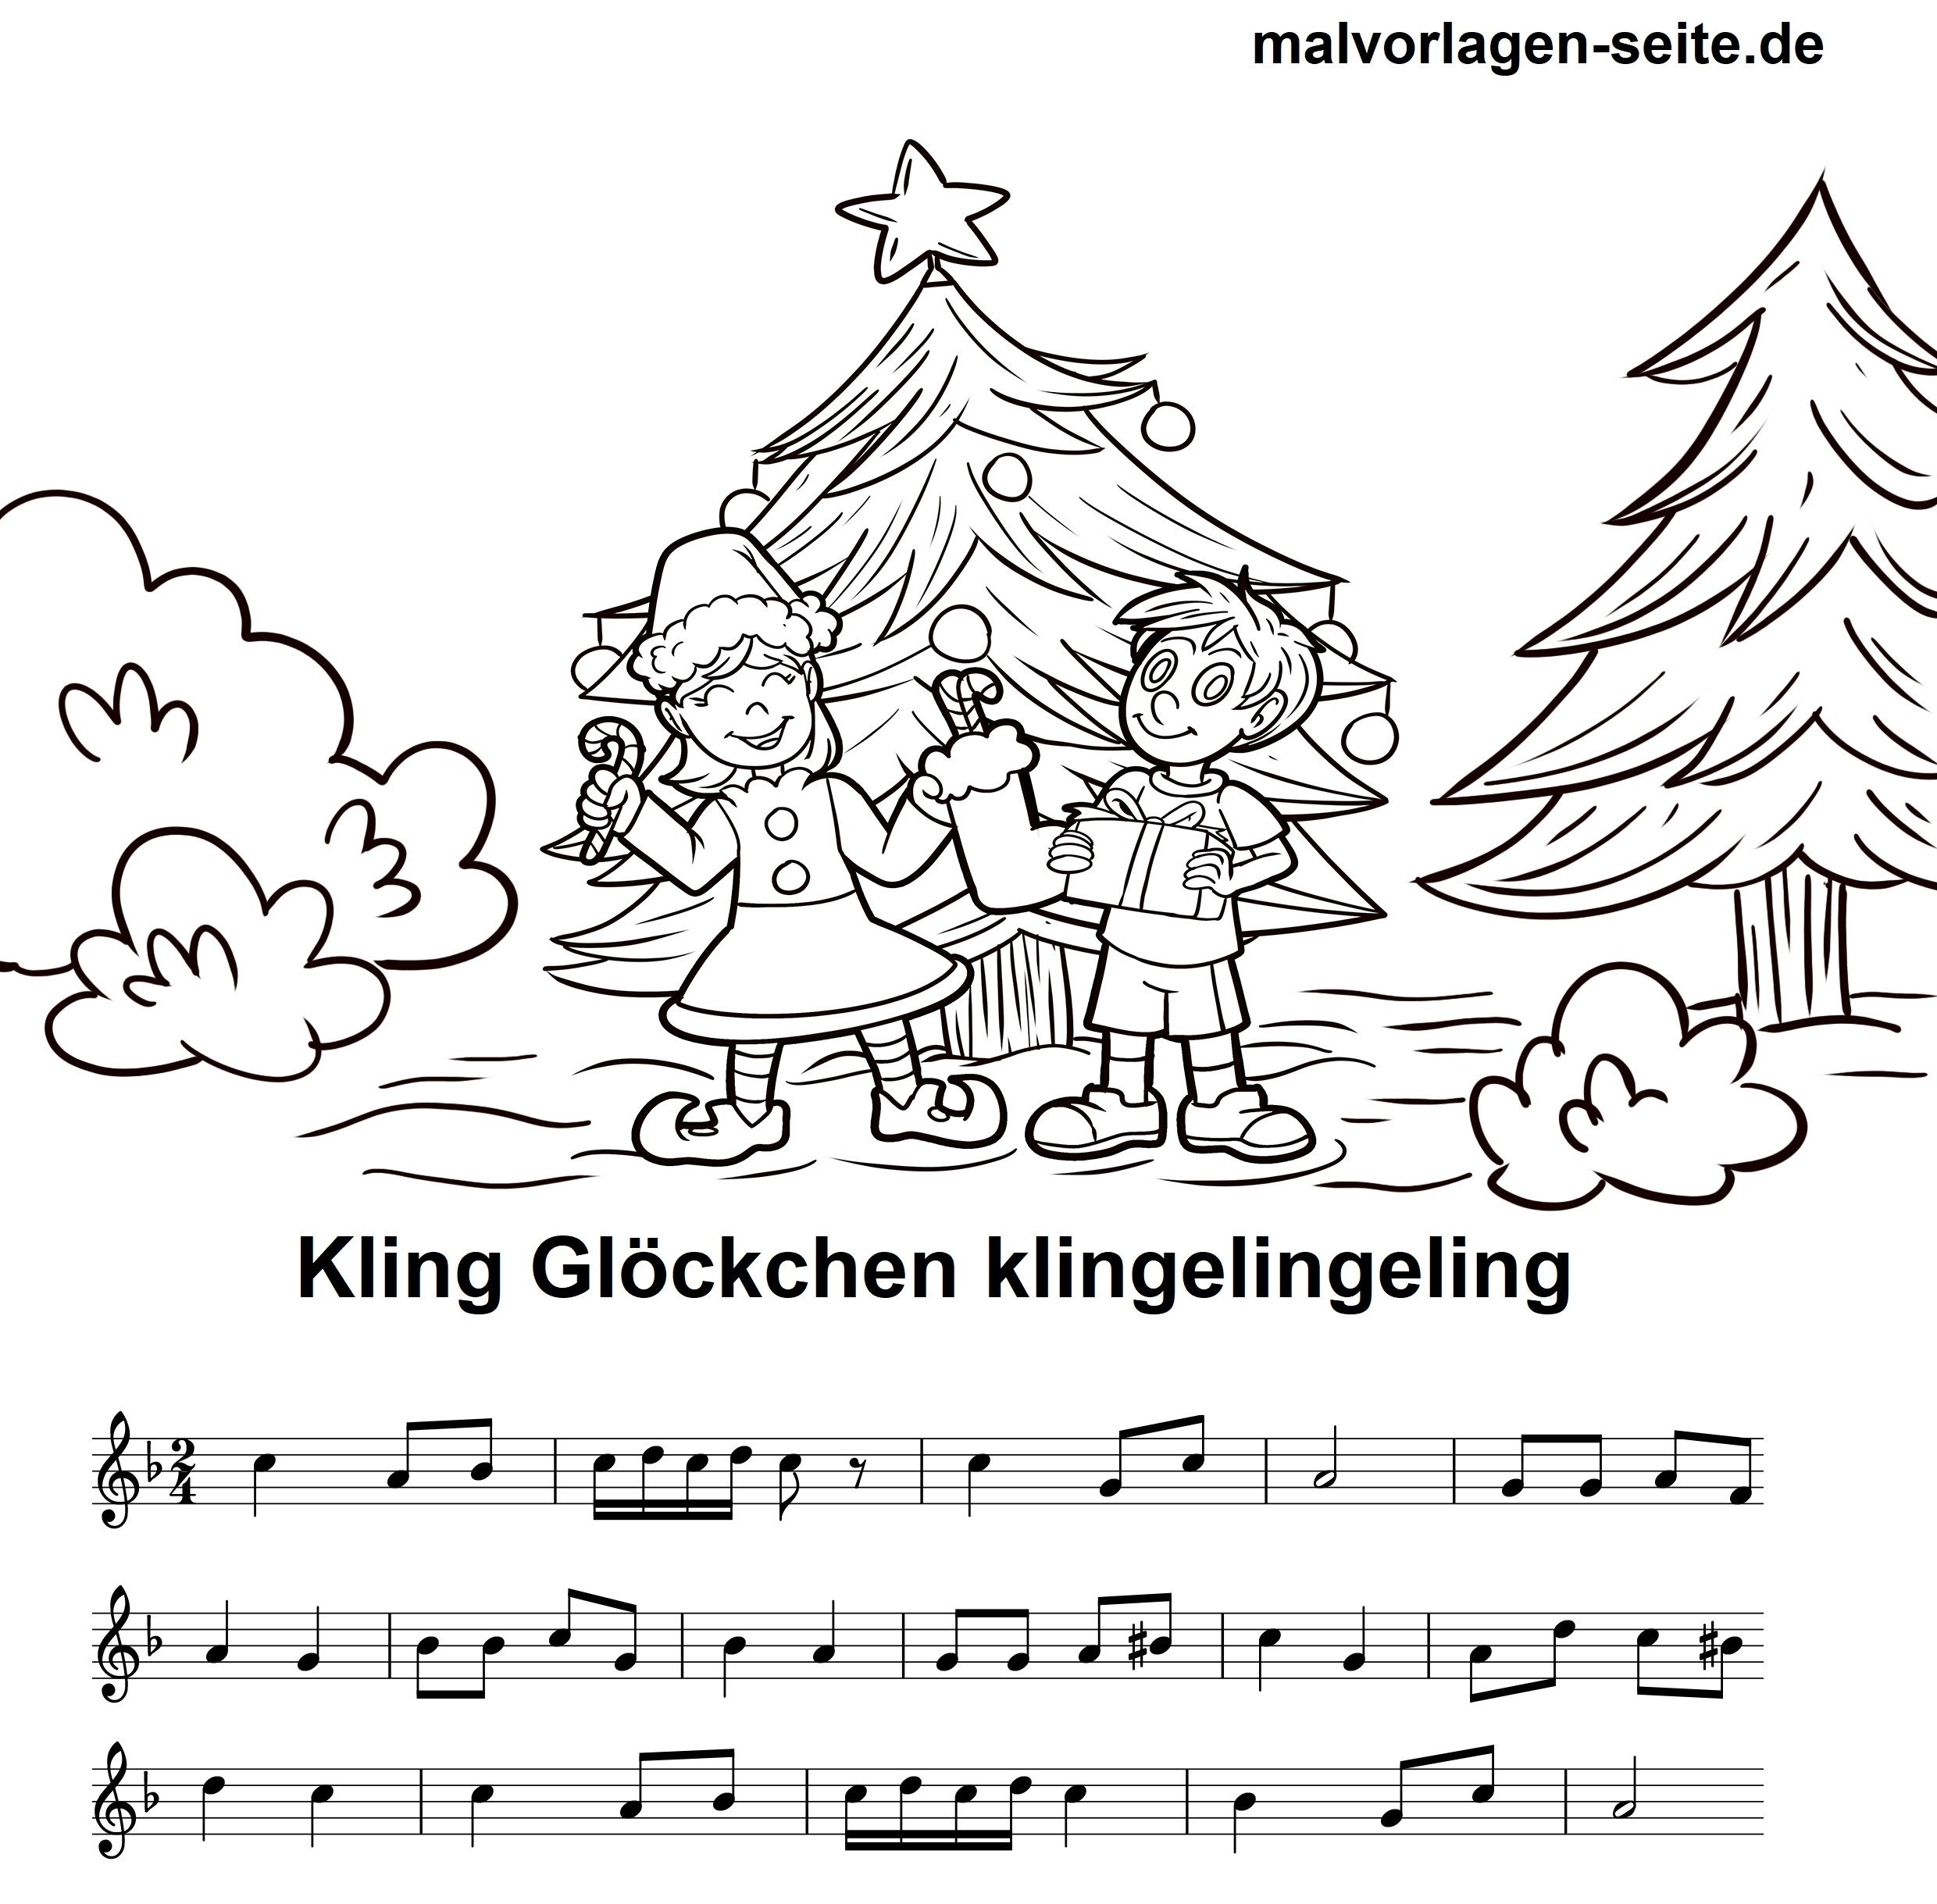 Kling Glöckchen Klingelingeling Text - kinderbilder.download